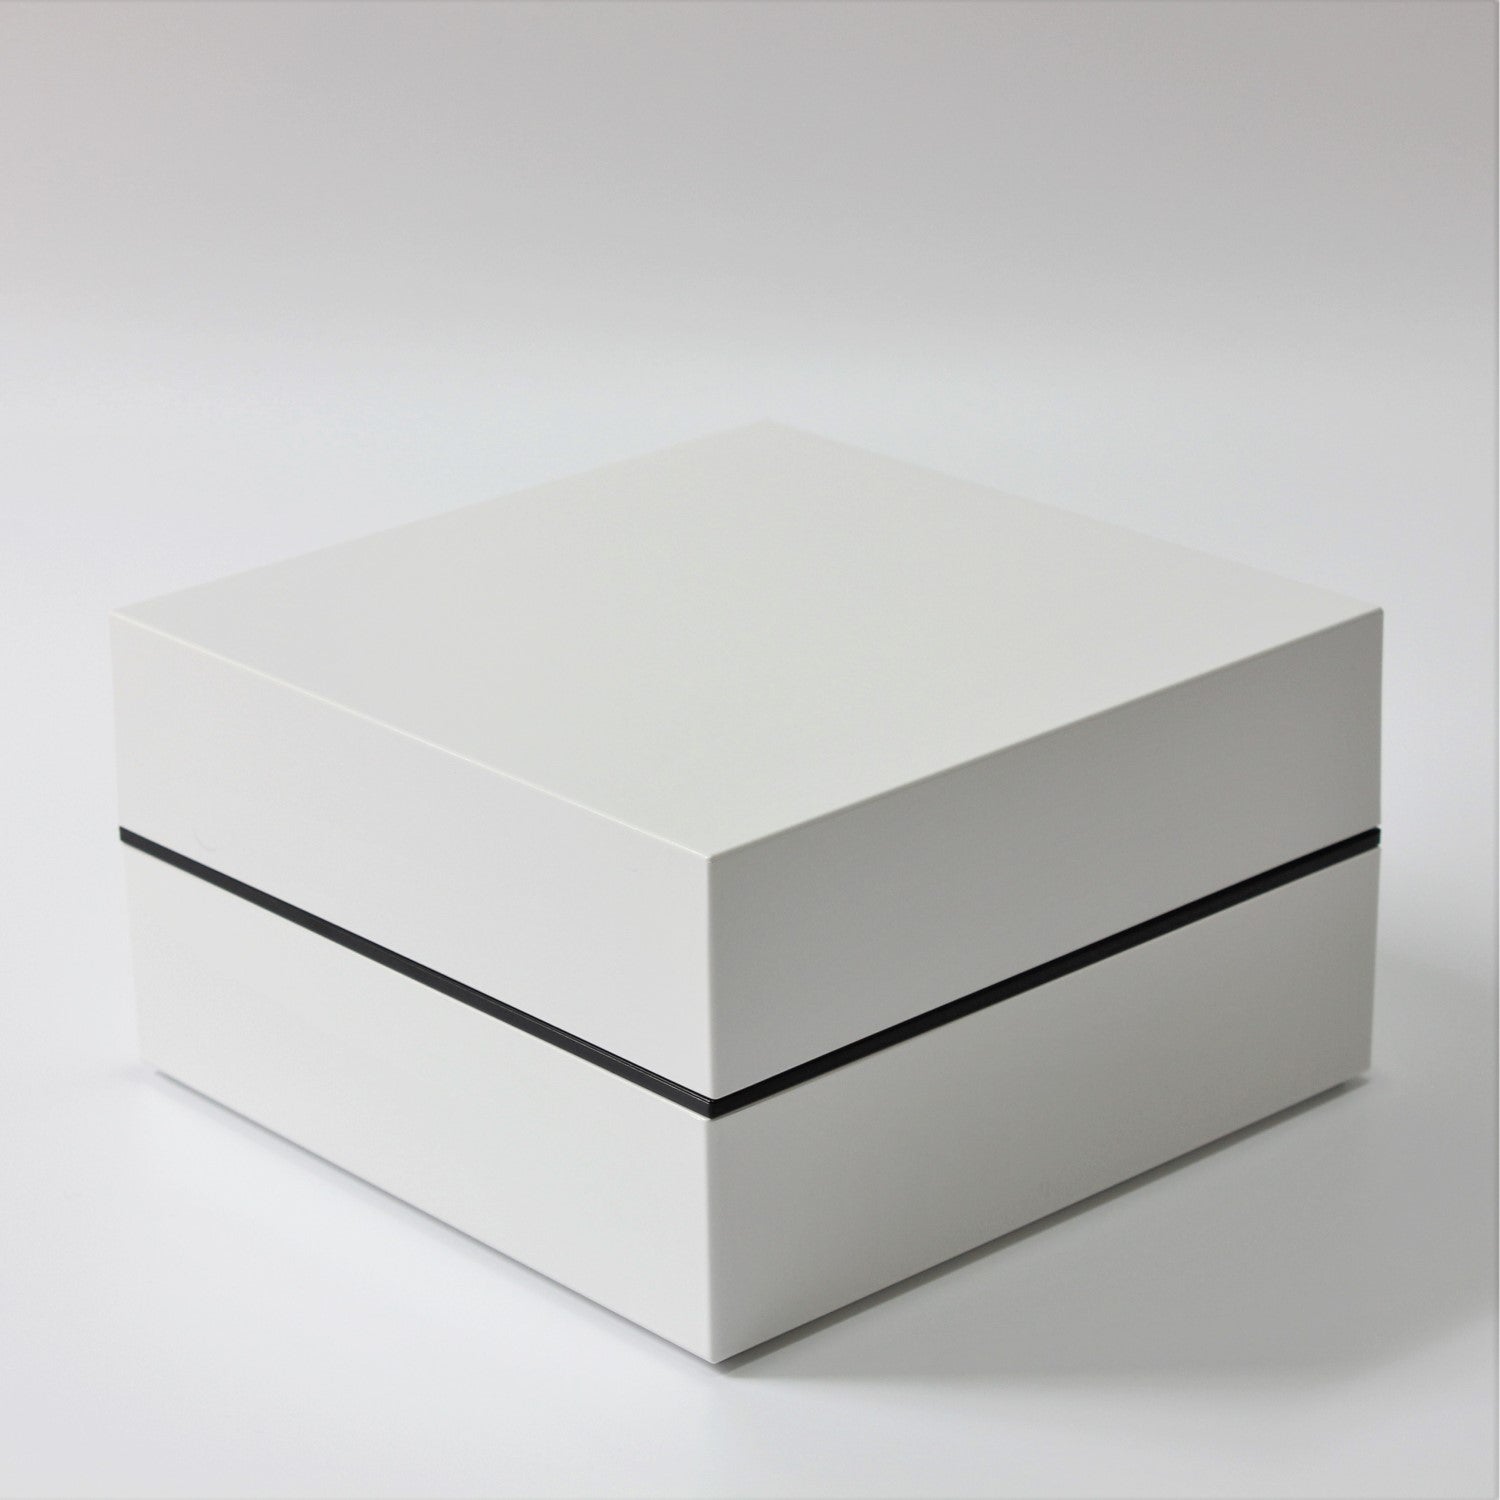 Shirayuki 2 Tier Picnic Bento Box from Japan Sleek design bento lunch box